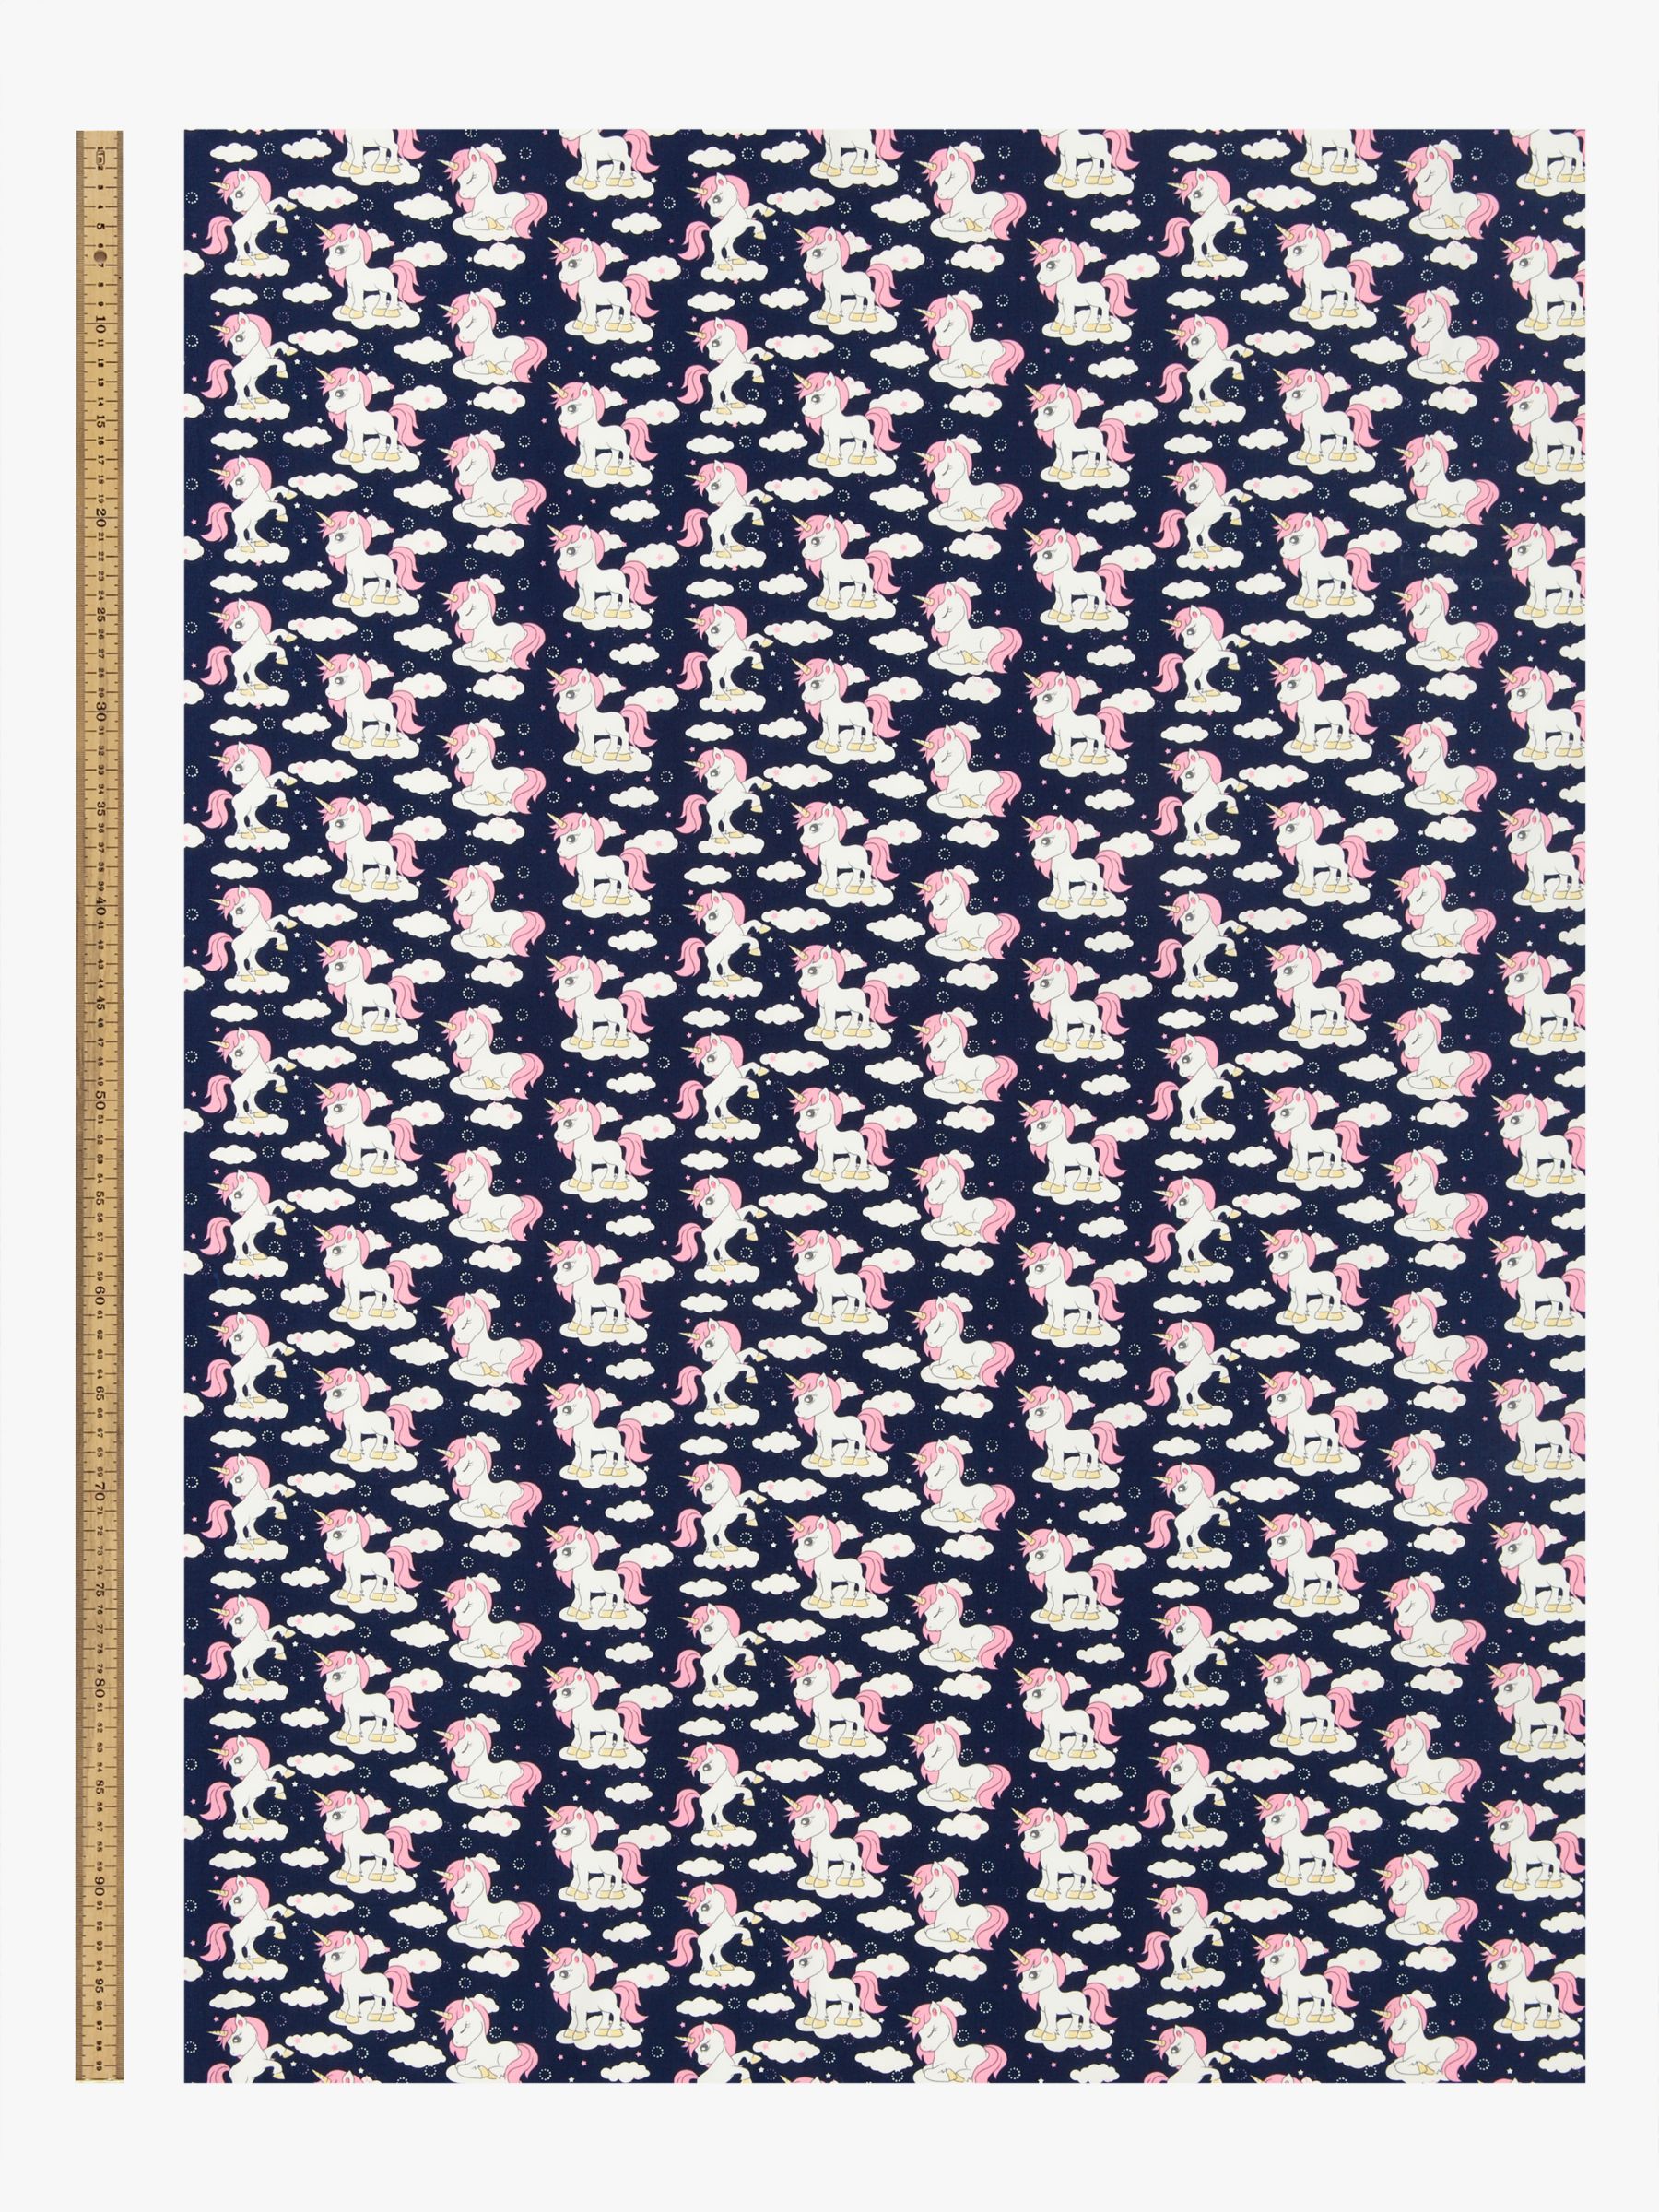 Oddies Textiles Unicorns Print Fabric, Navy/Multi